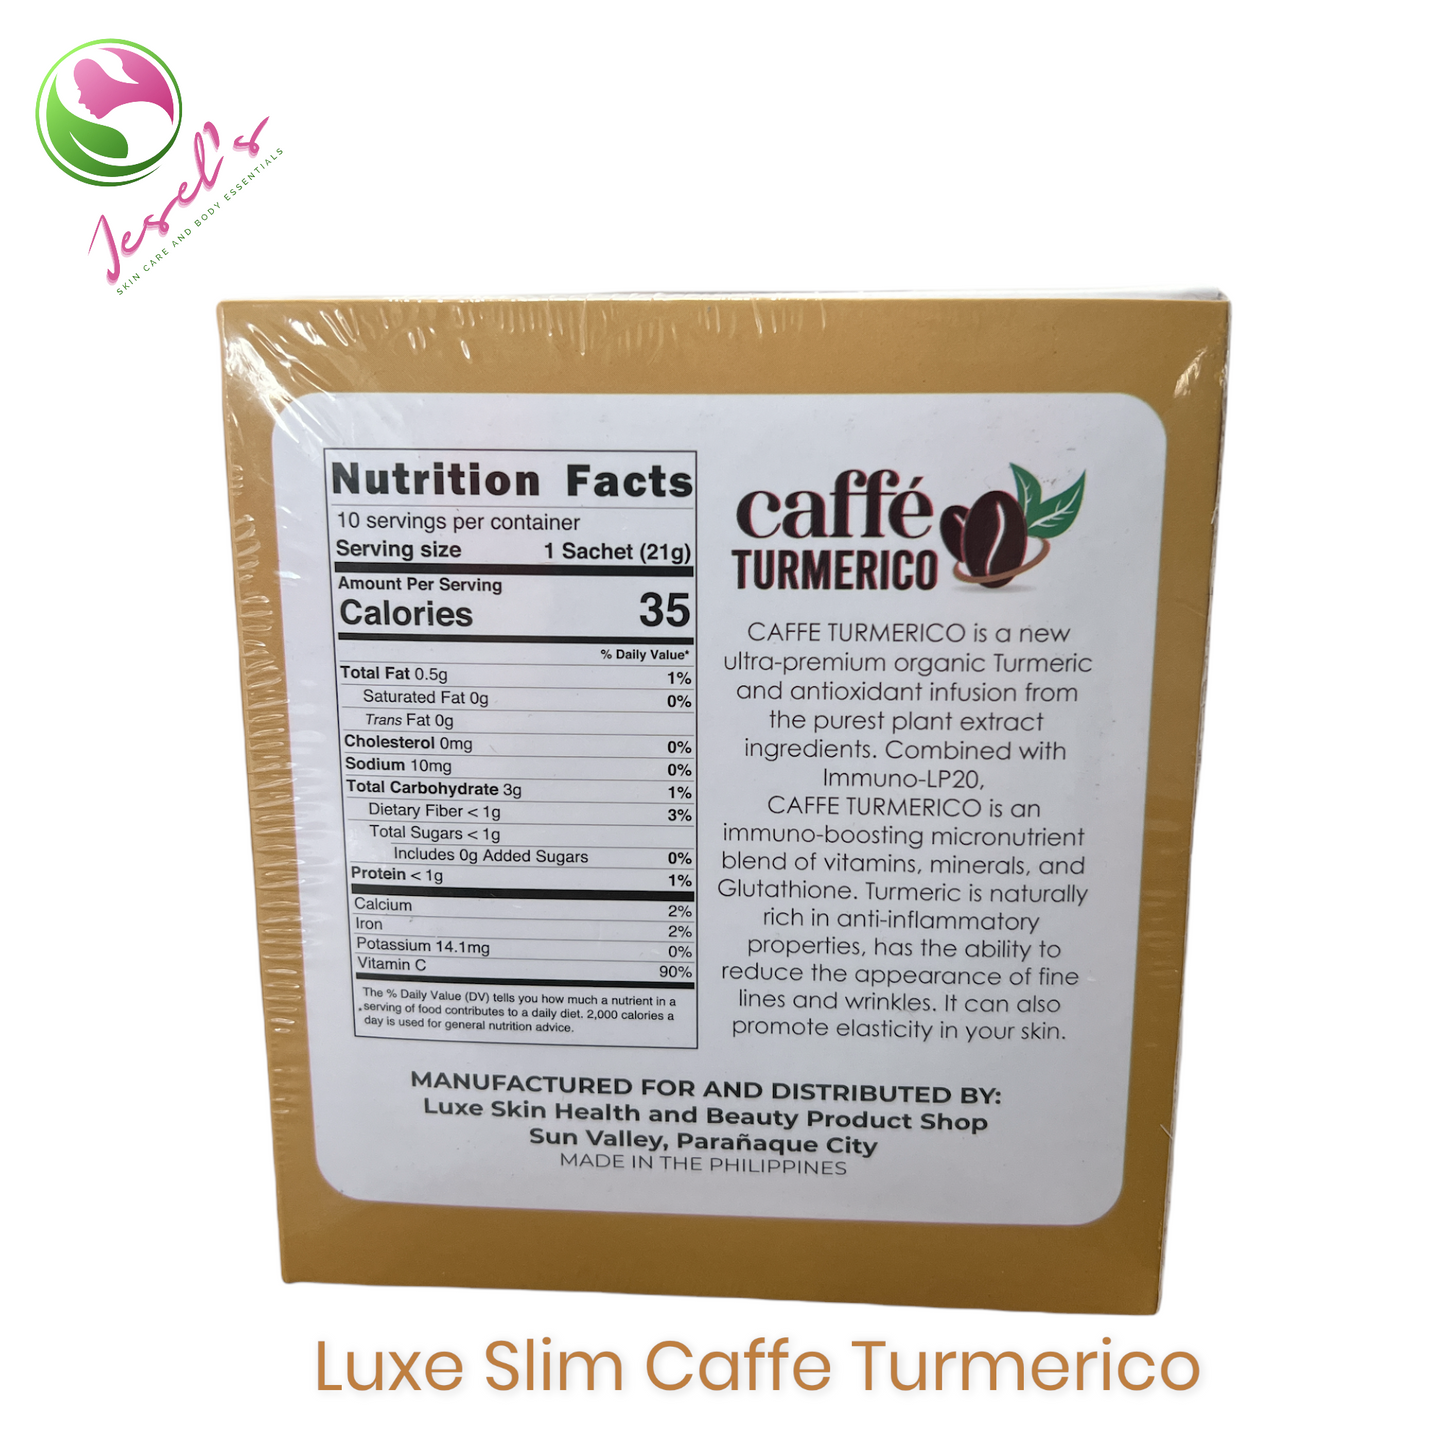 Luxe Slim Caffe Turmerico